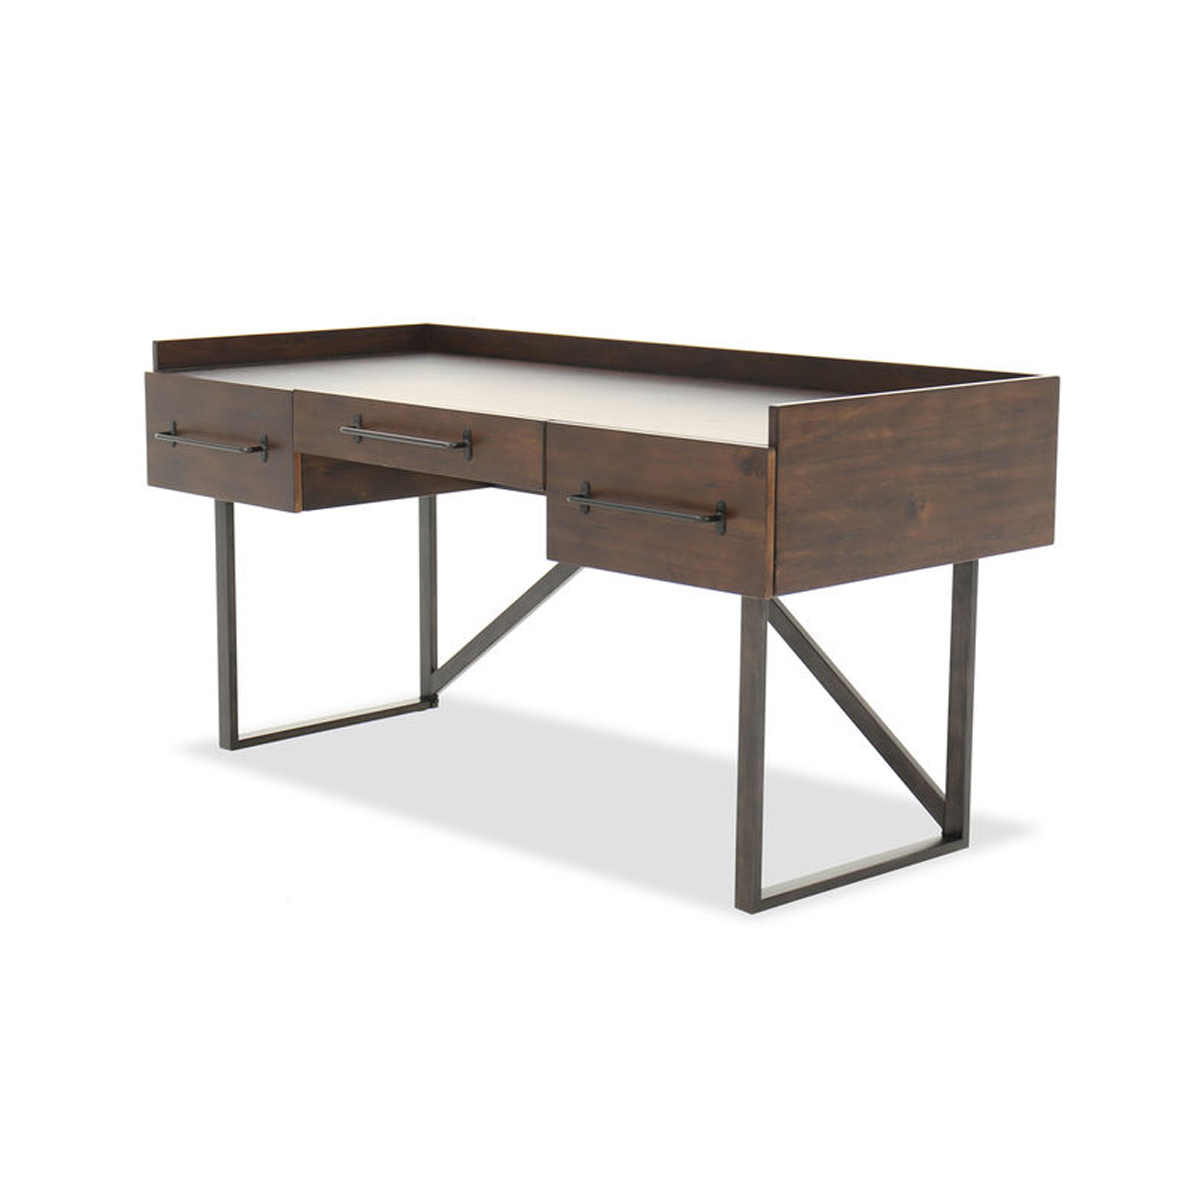 Three Drawers Wooden Desk With Tubular Metal Base And Bar Handles, Brown And Black- Saltoro Sherpi